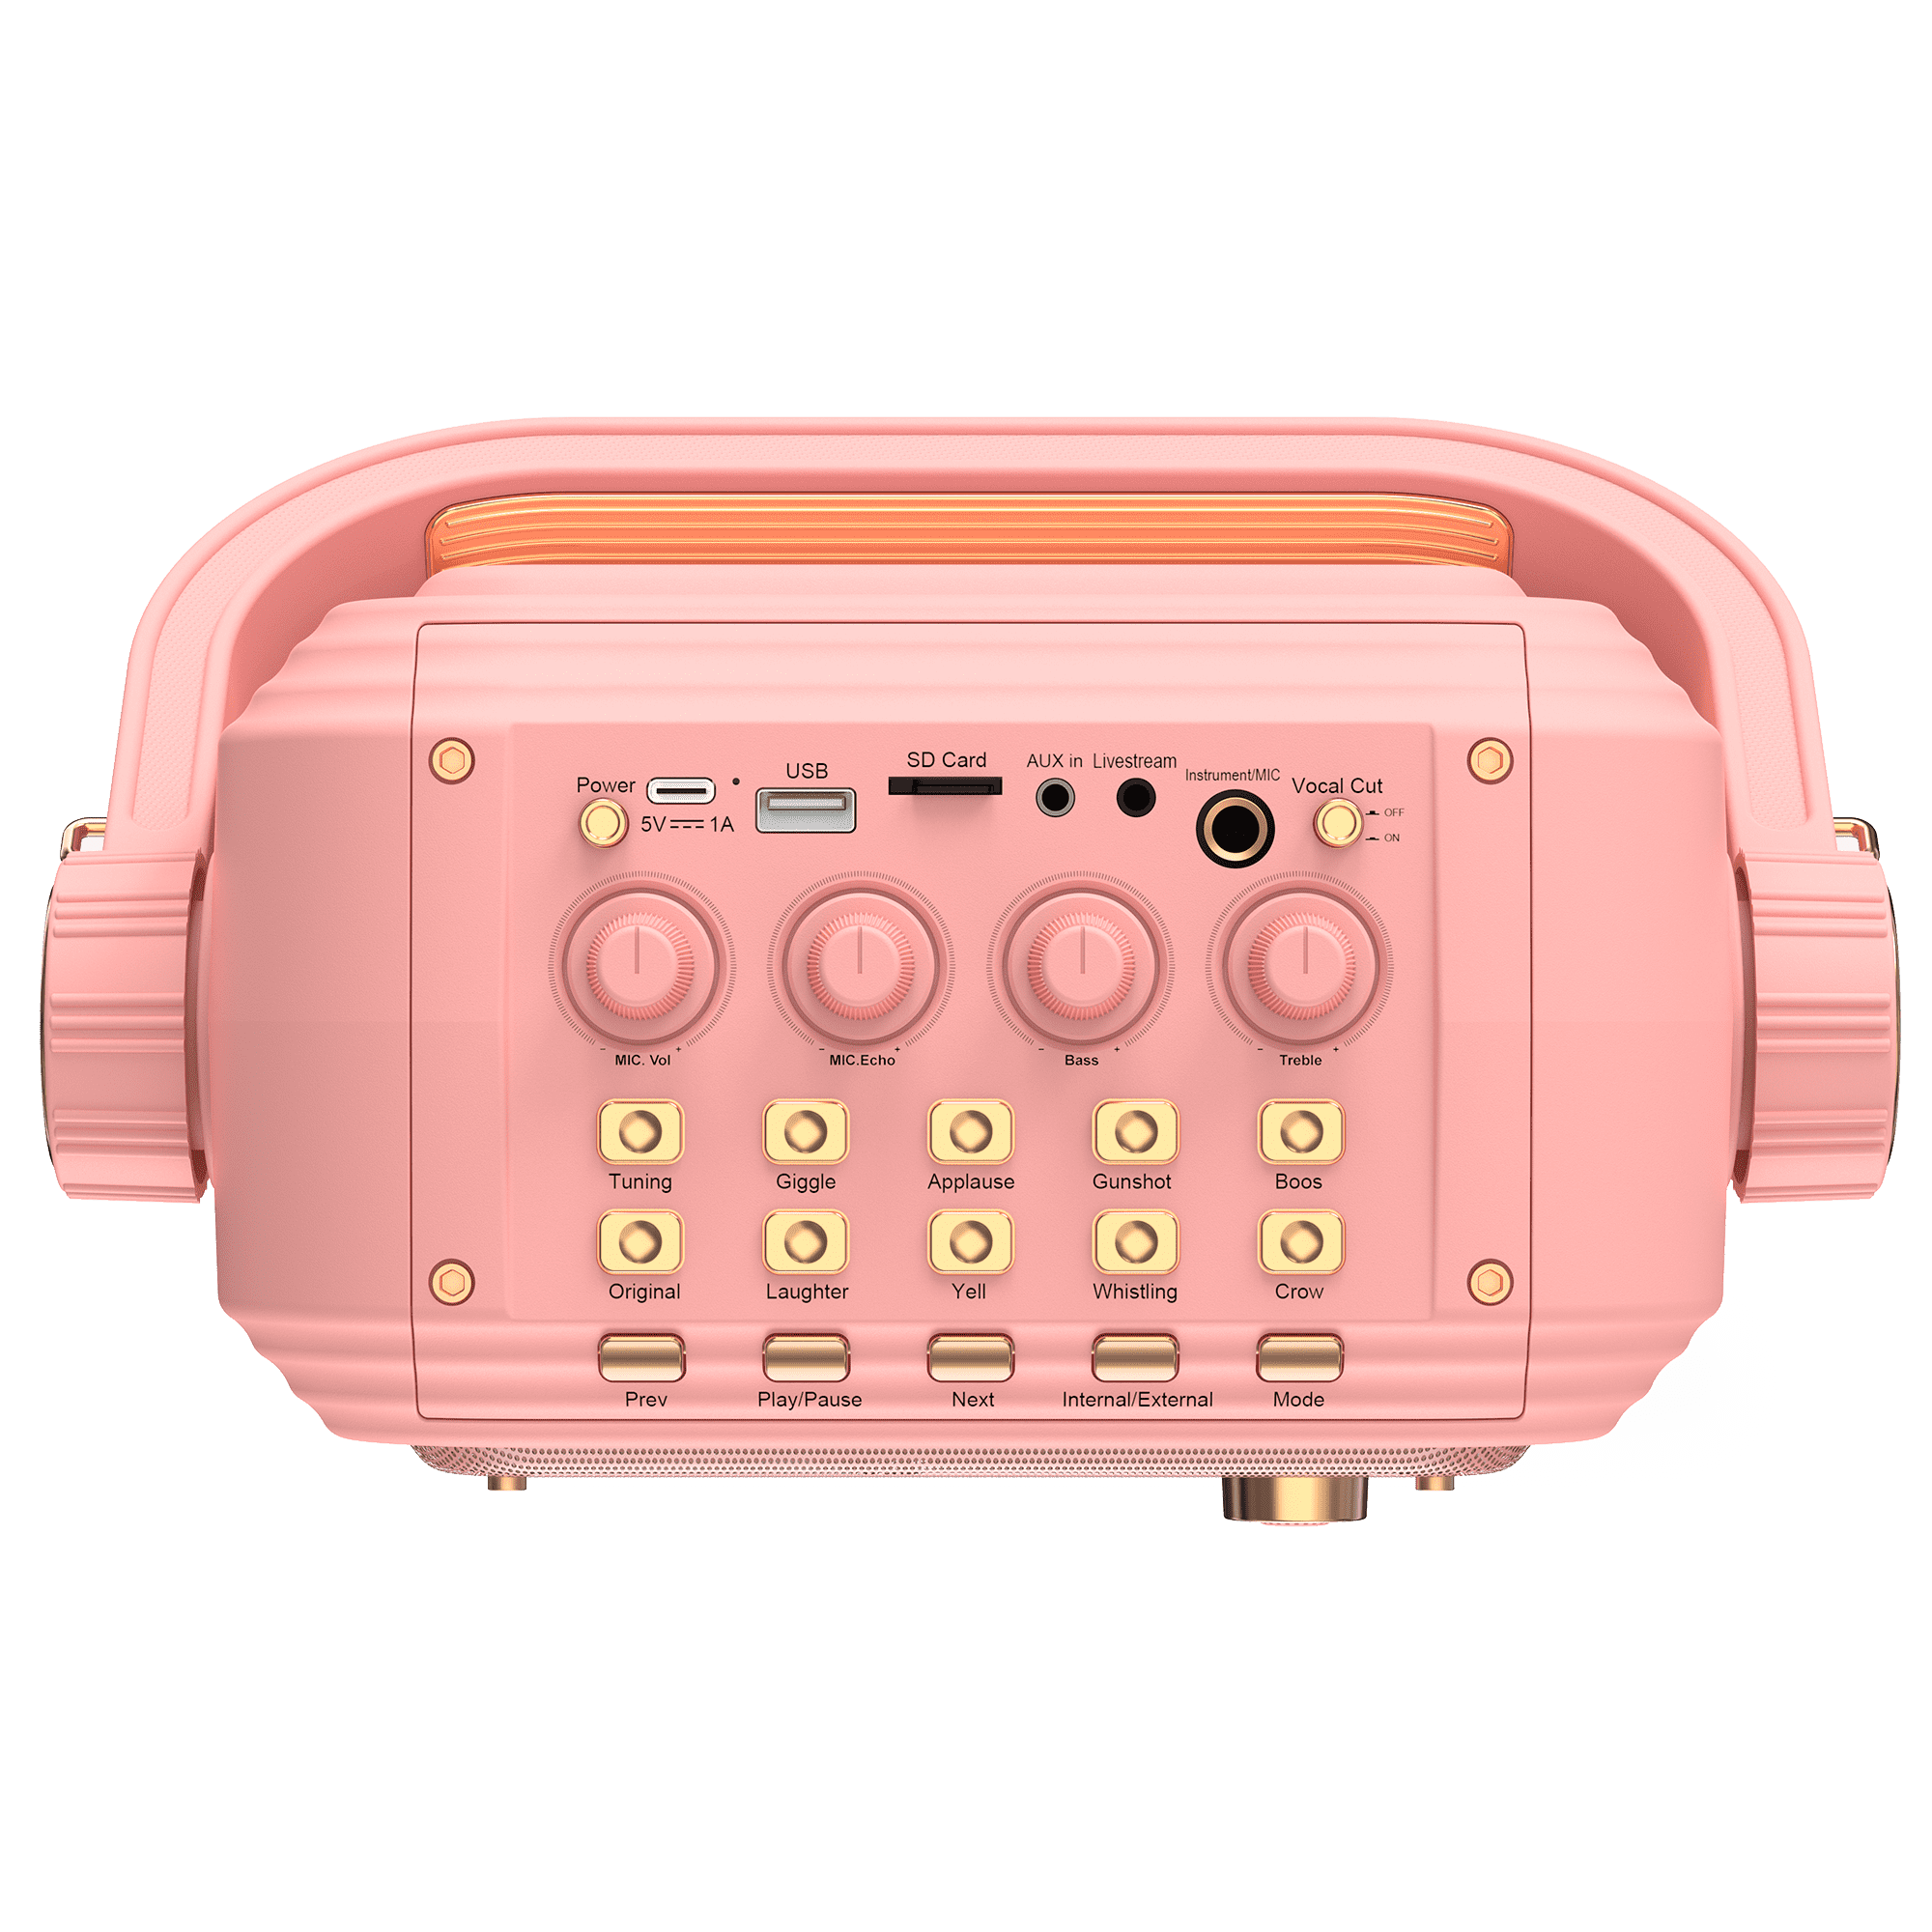 Control panel of JYX TX02 karaoke machine in pink